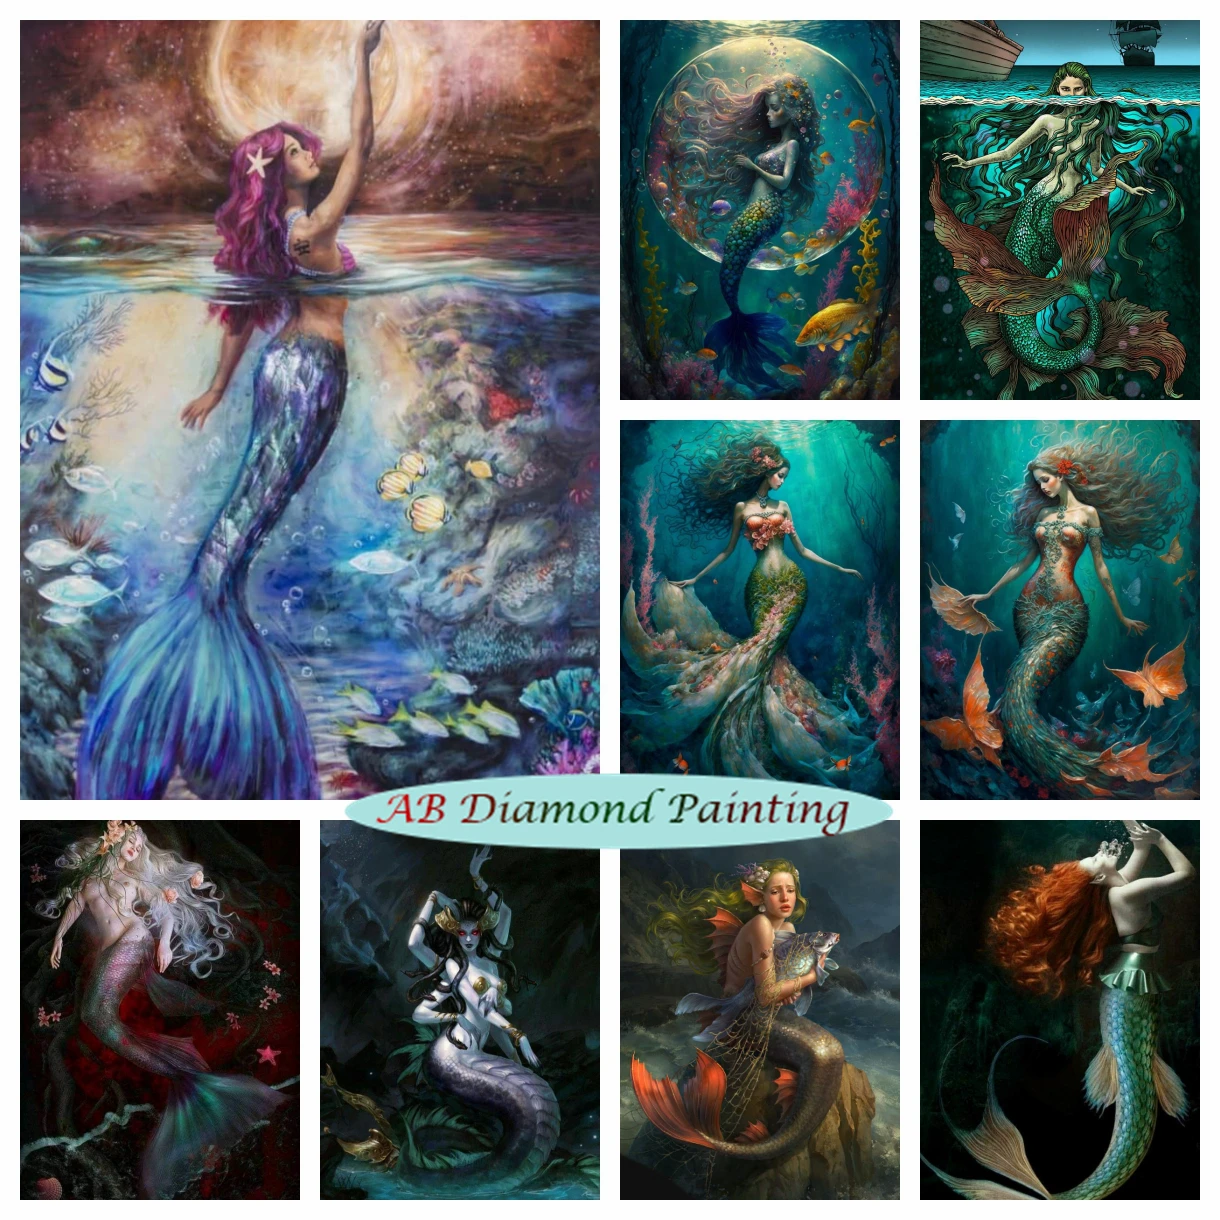 

Underwater Fairy Mermaid AB Diamond Painting Art Fantasy Ocean Landscape Rhinestones Embroidery Cross Stitch Kit Wall Decor Gift